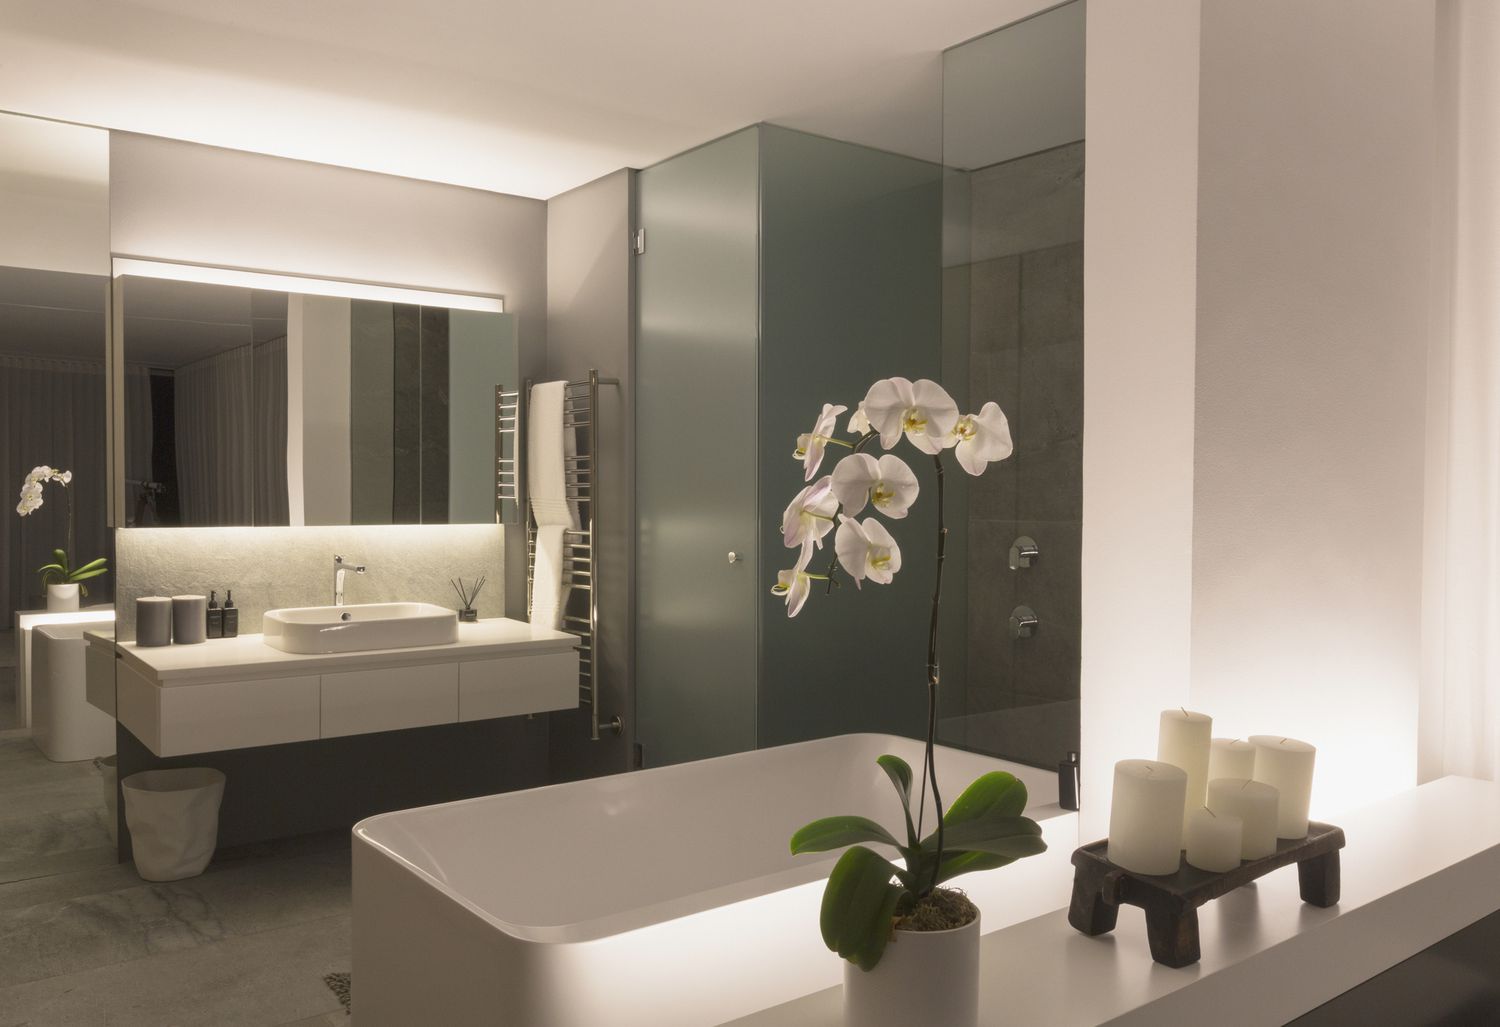 modern--luxury-home-showcase-bathroom